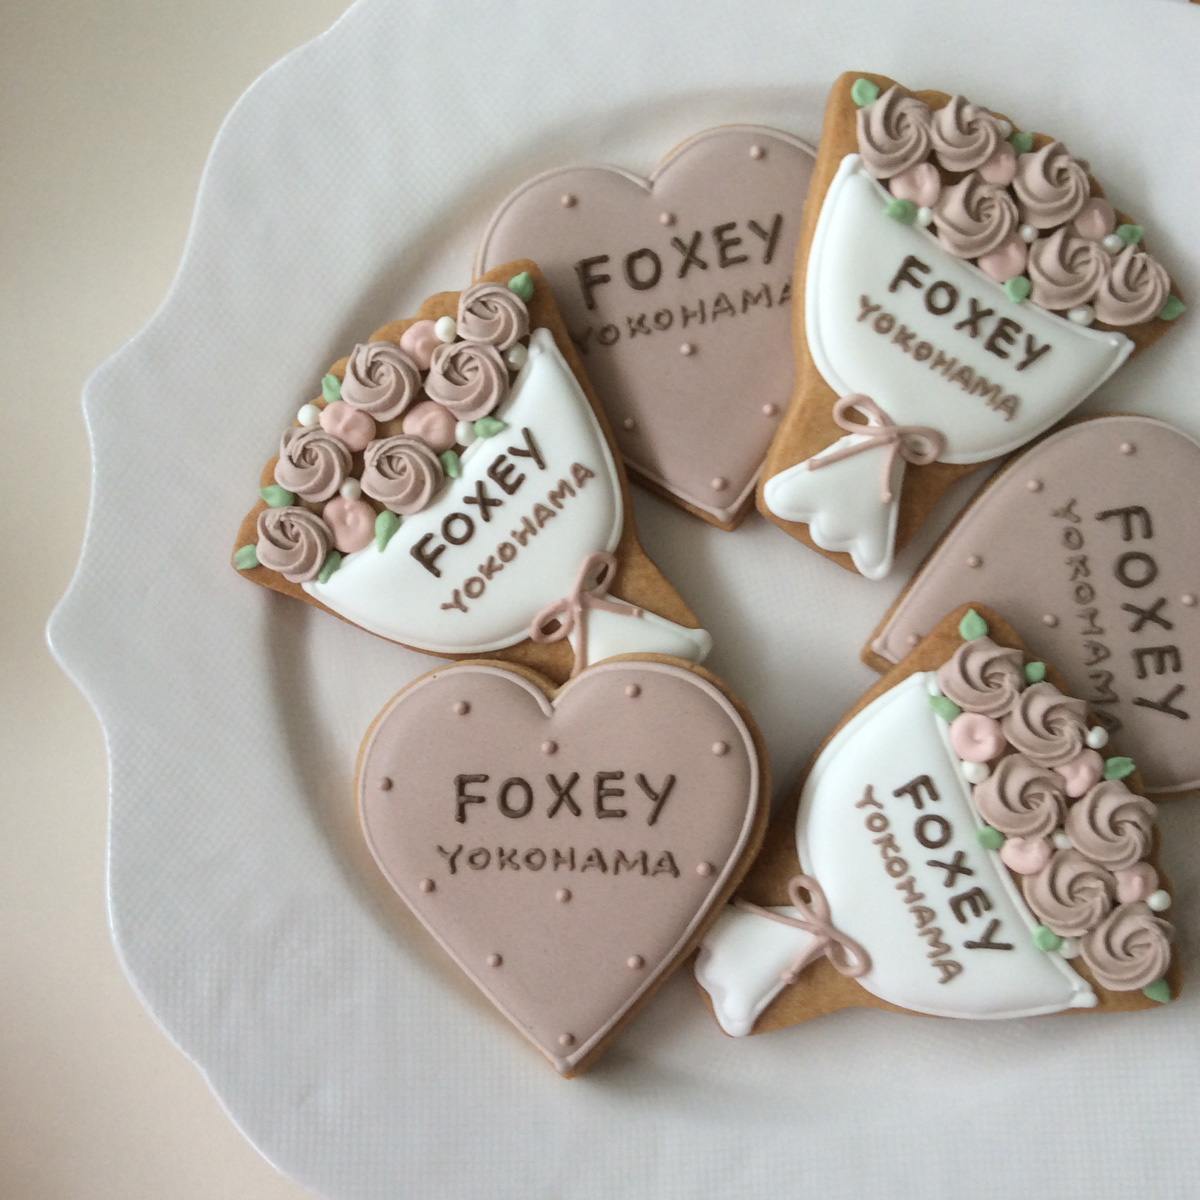 「FOXEY」Yokohama ノベルティクッキー